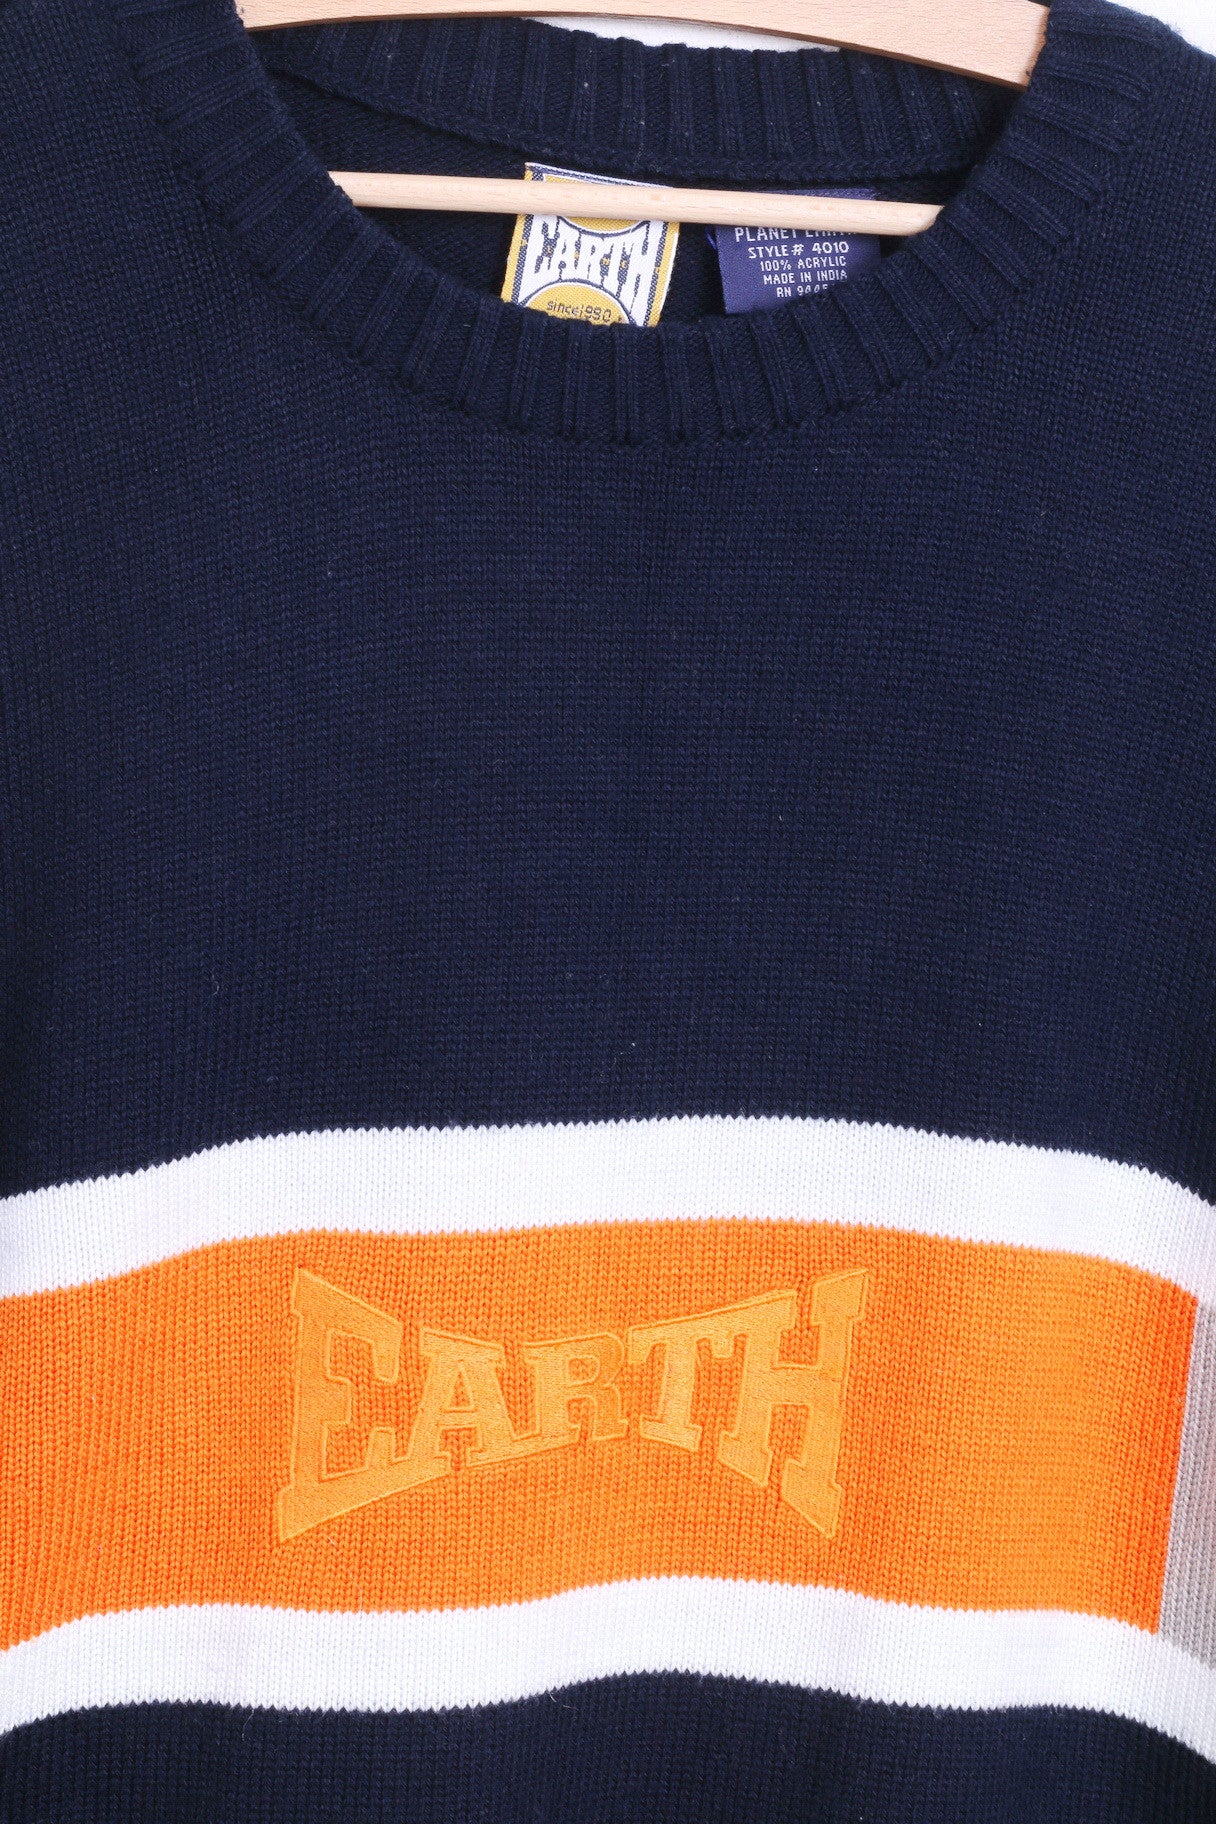 EARTH Mens XL Jumper Sweater Crew Neck Navy India - RetrospectClothes